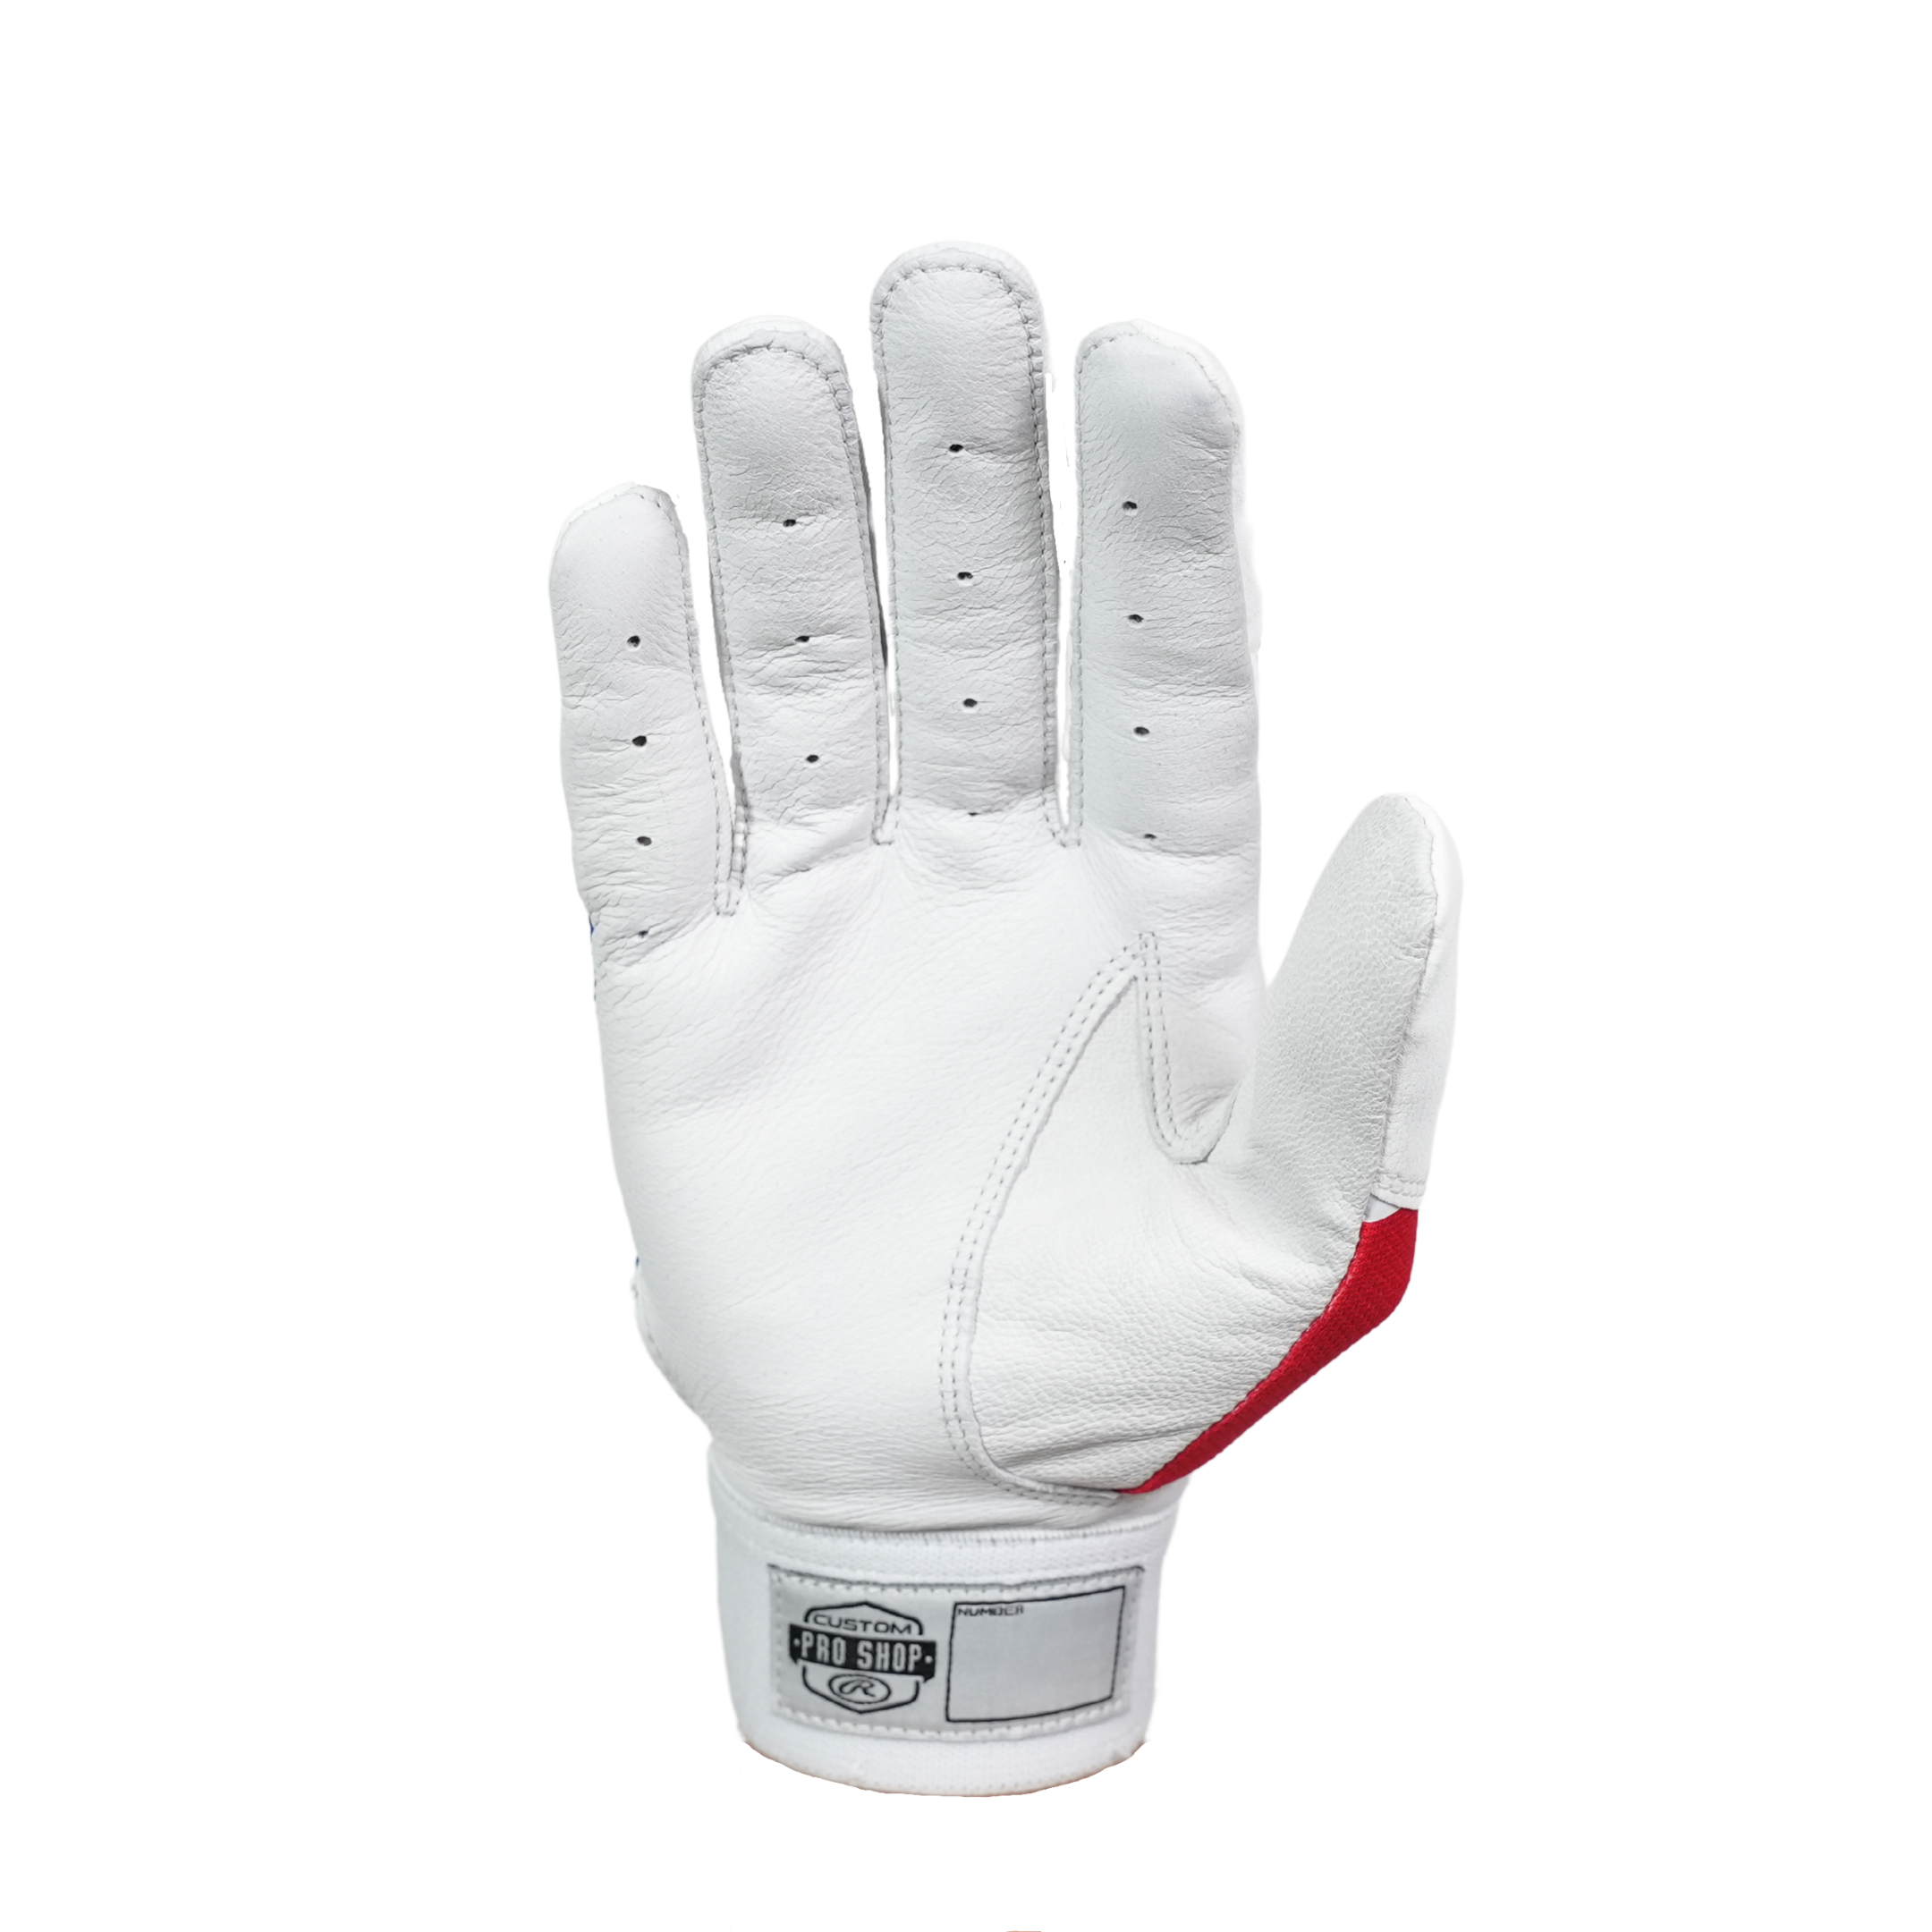 Rawlings X Guardian Baseball 5150 Limited Edition State Batting Gloves